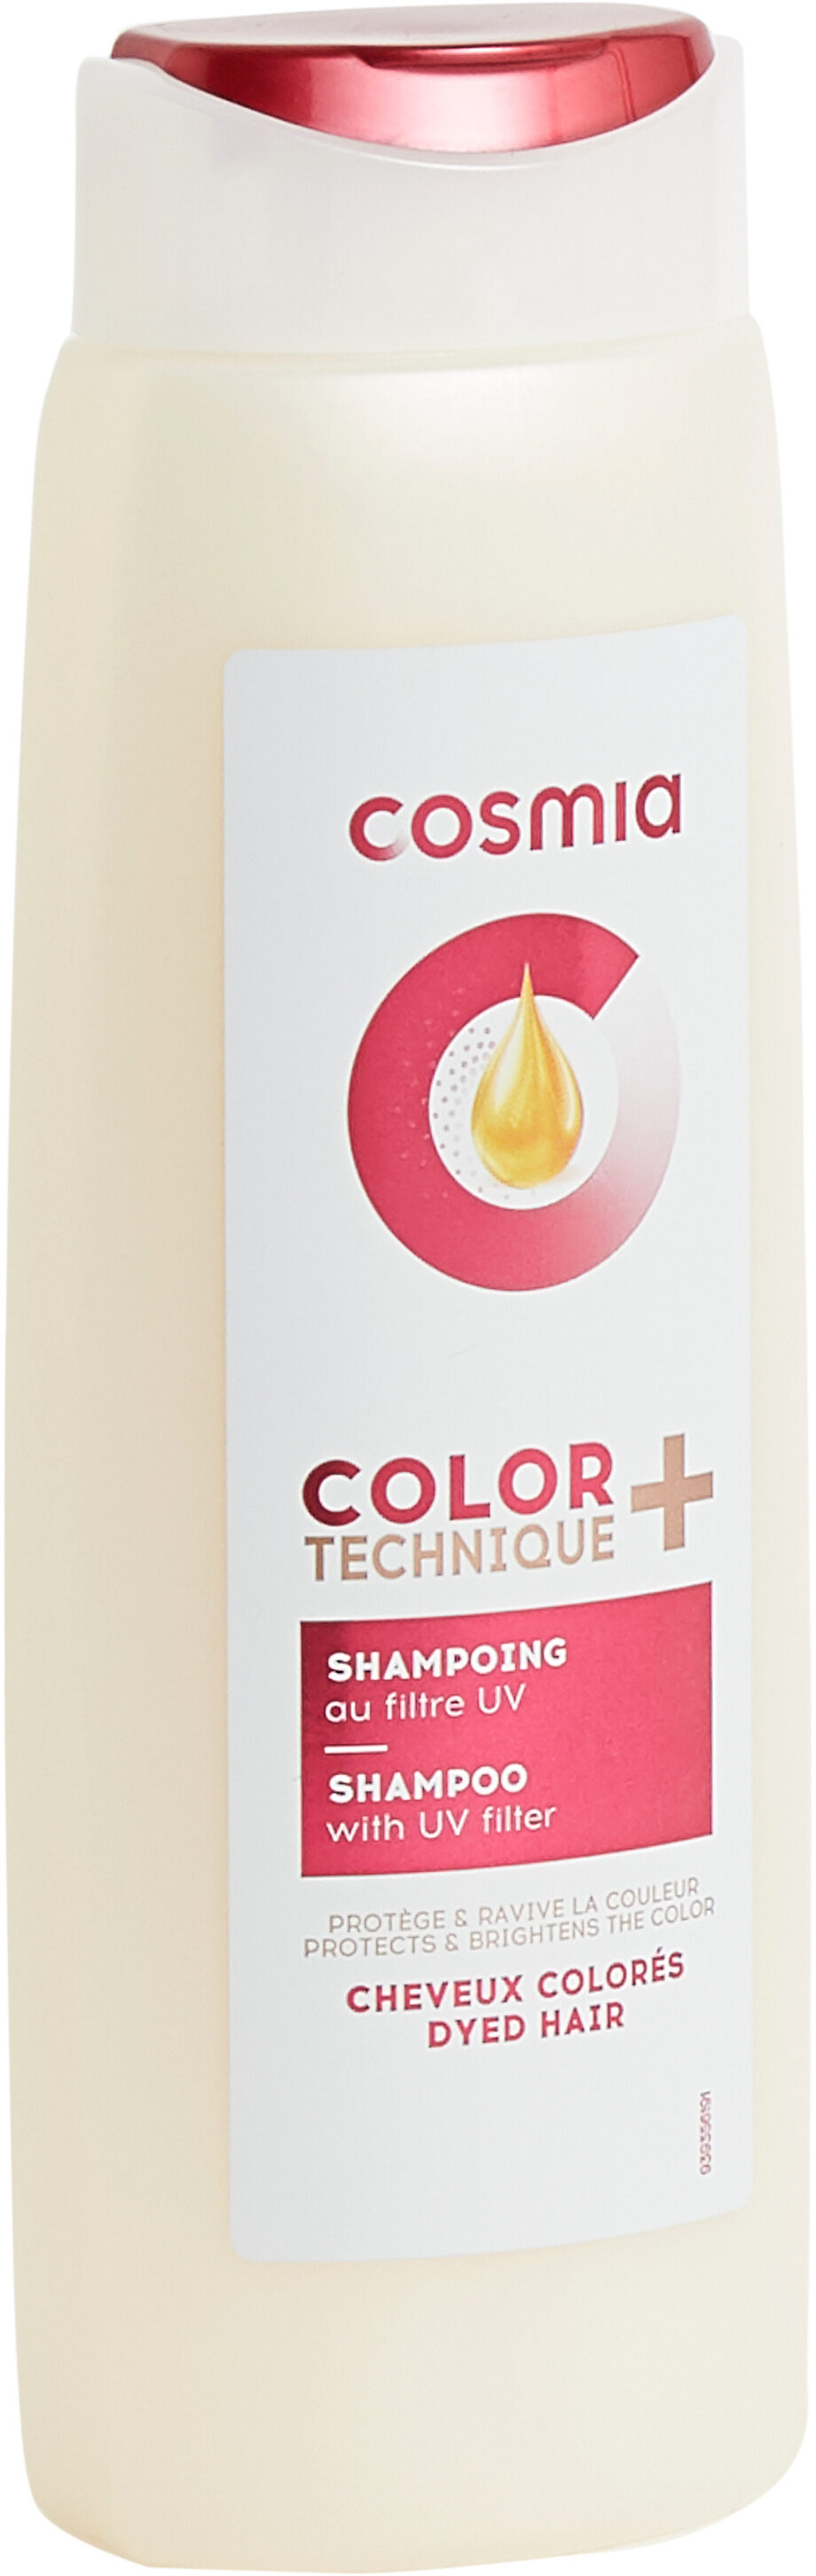 Shampoing technique color - Tuote - fr